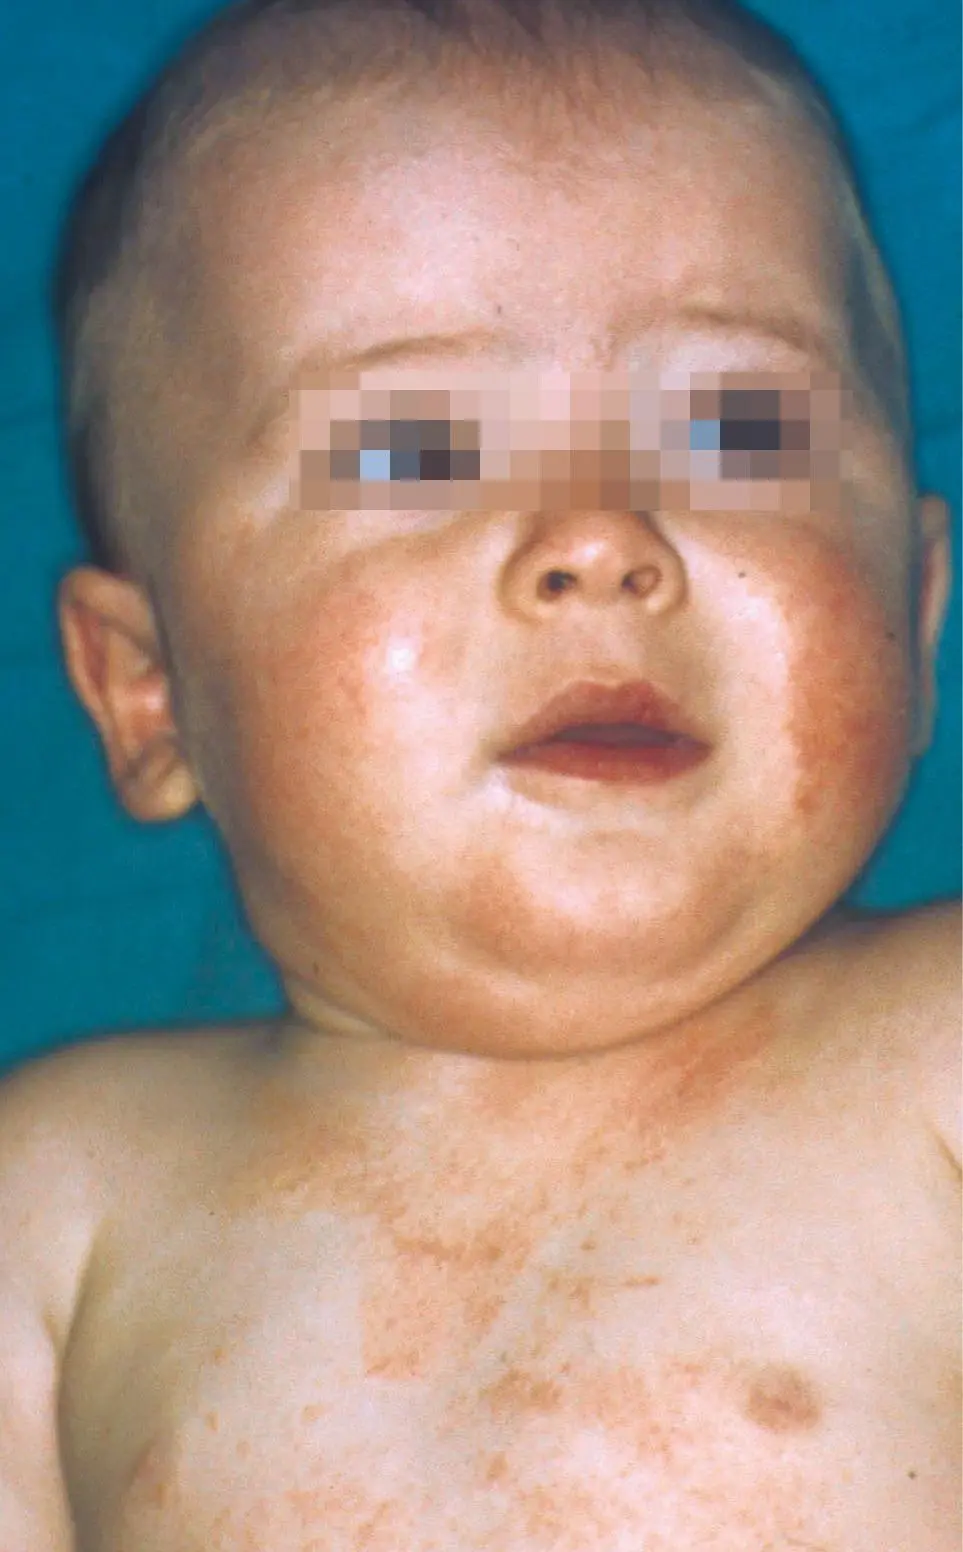 Figura 2. Dermatitis atópica en fase del lactante